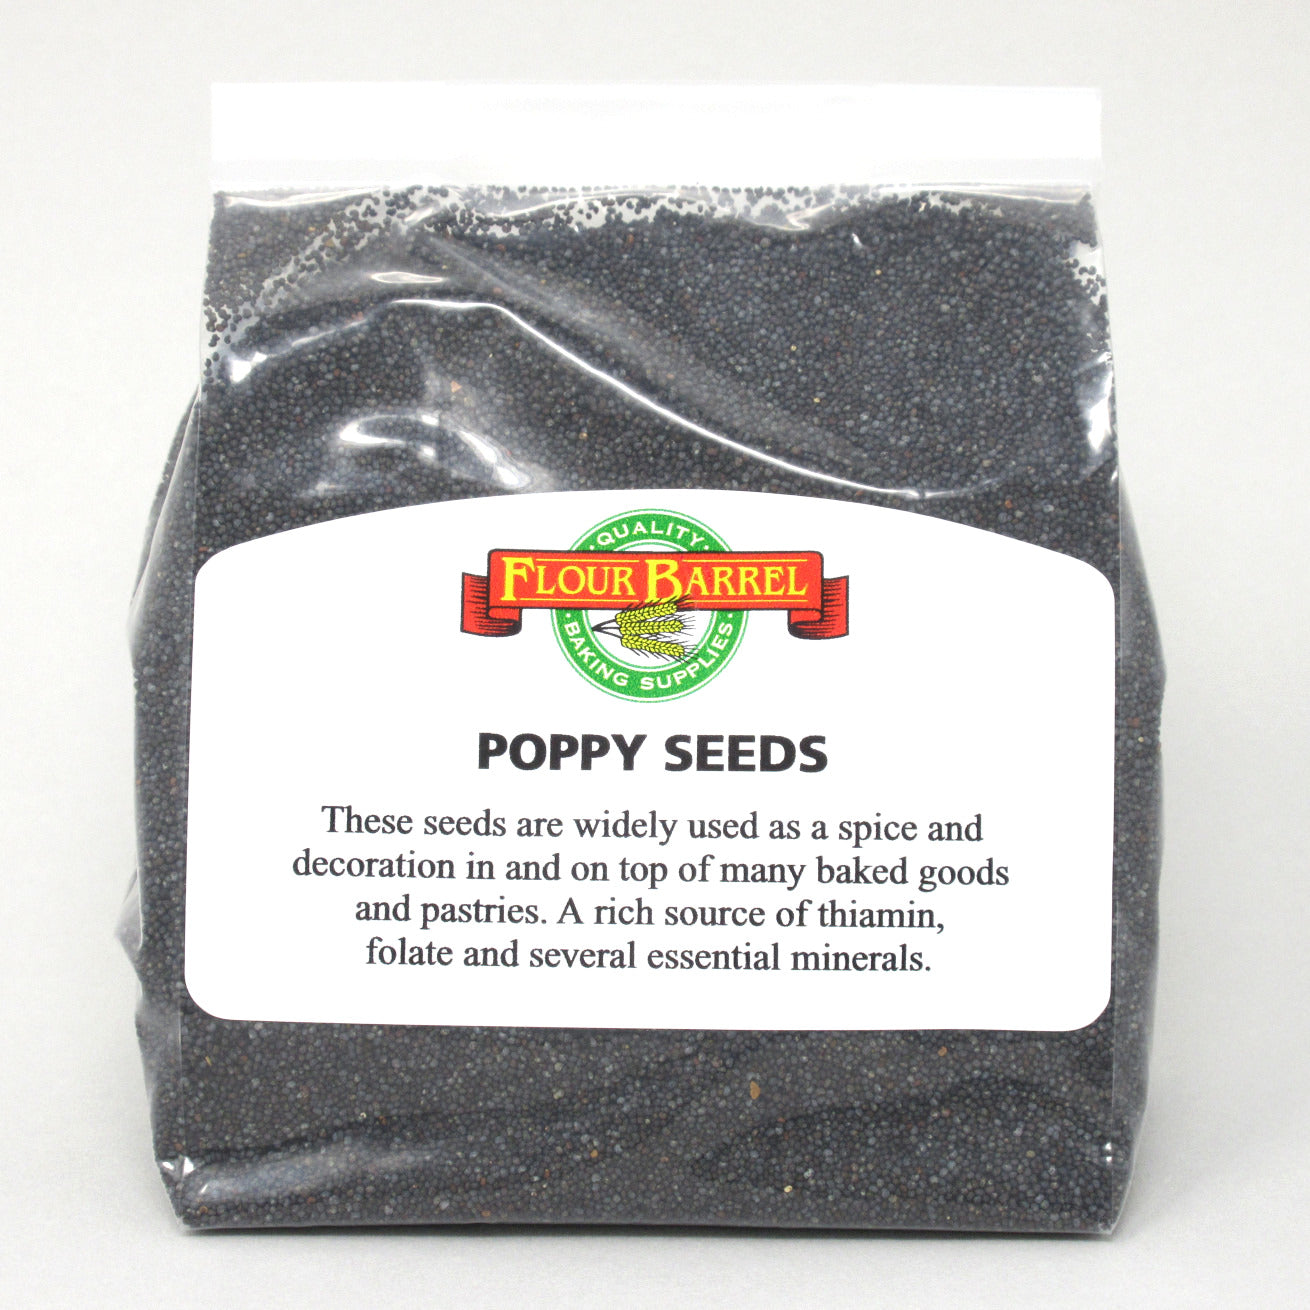 Flour Barrel product image - Poppy Seeds